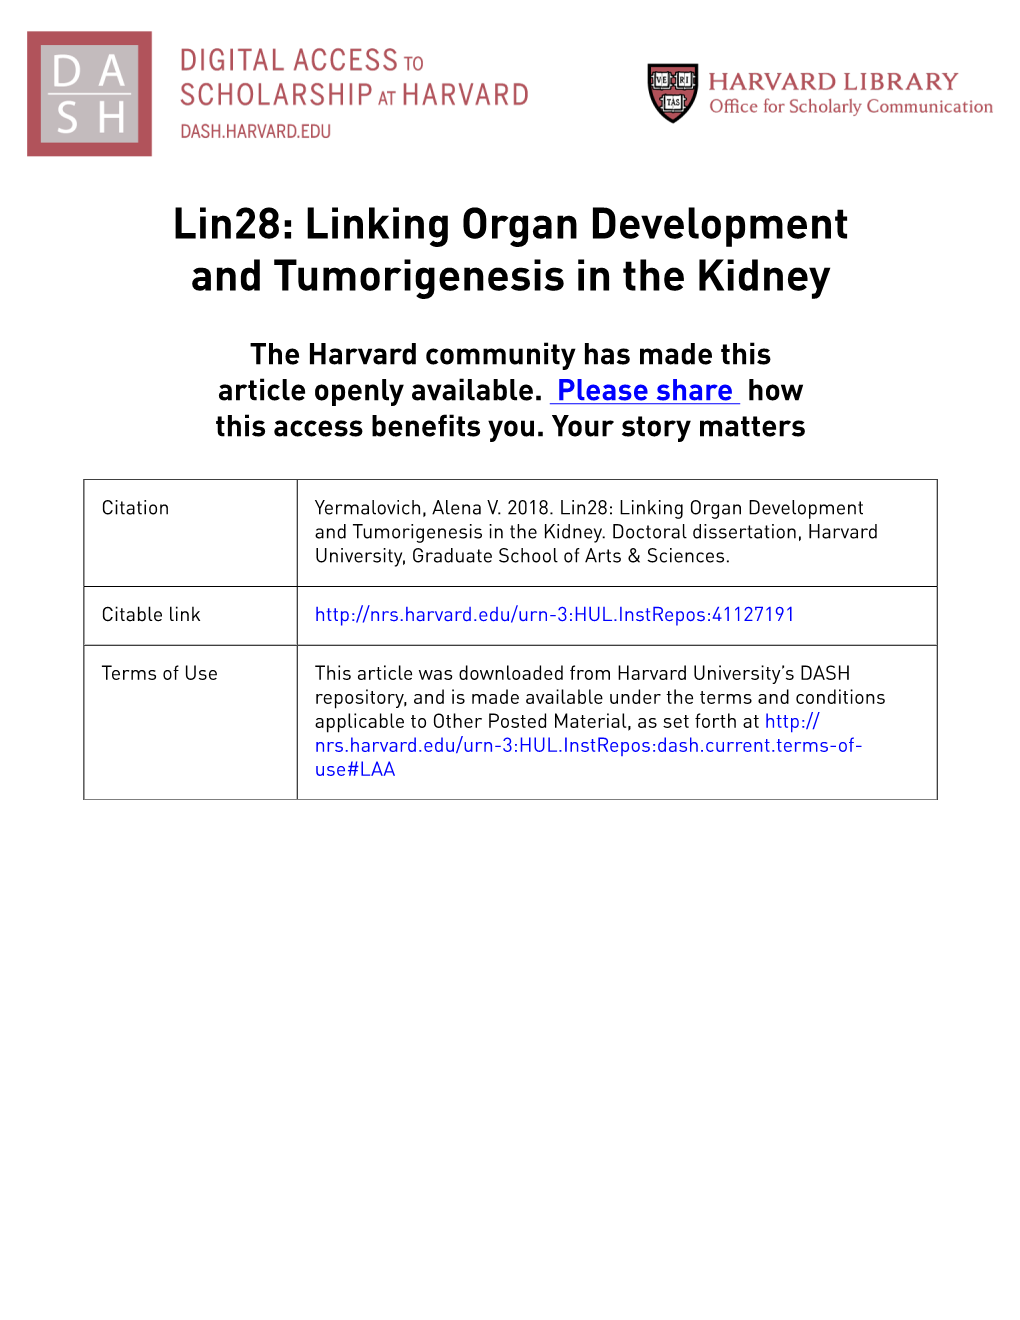 Lin28: Linking Organ Development and Tumorigenesis in the Kidney